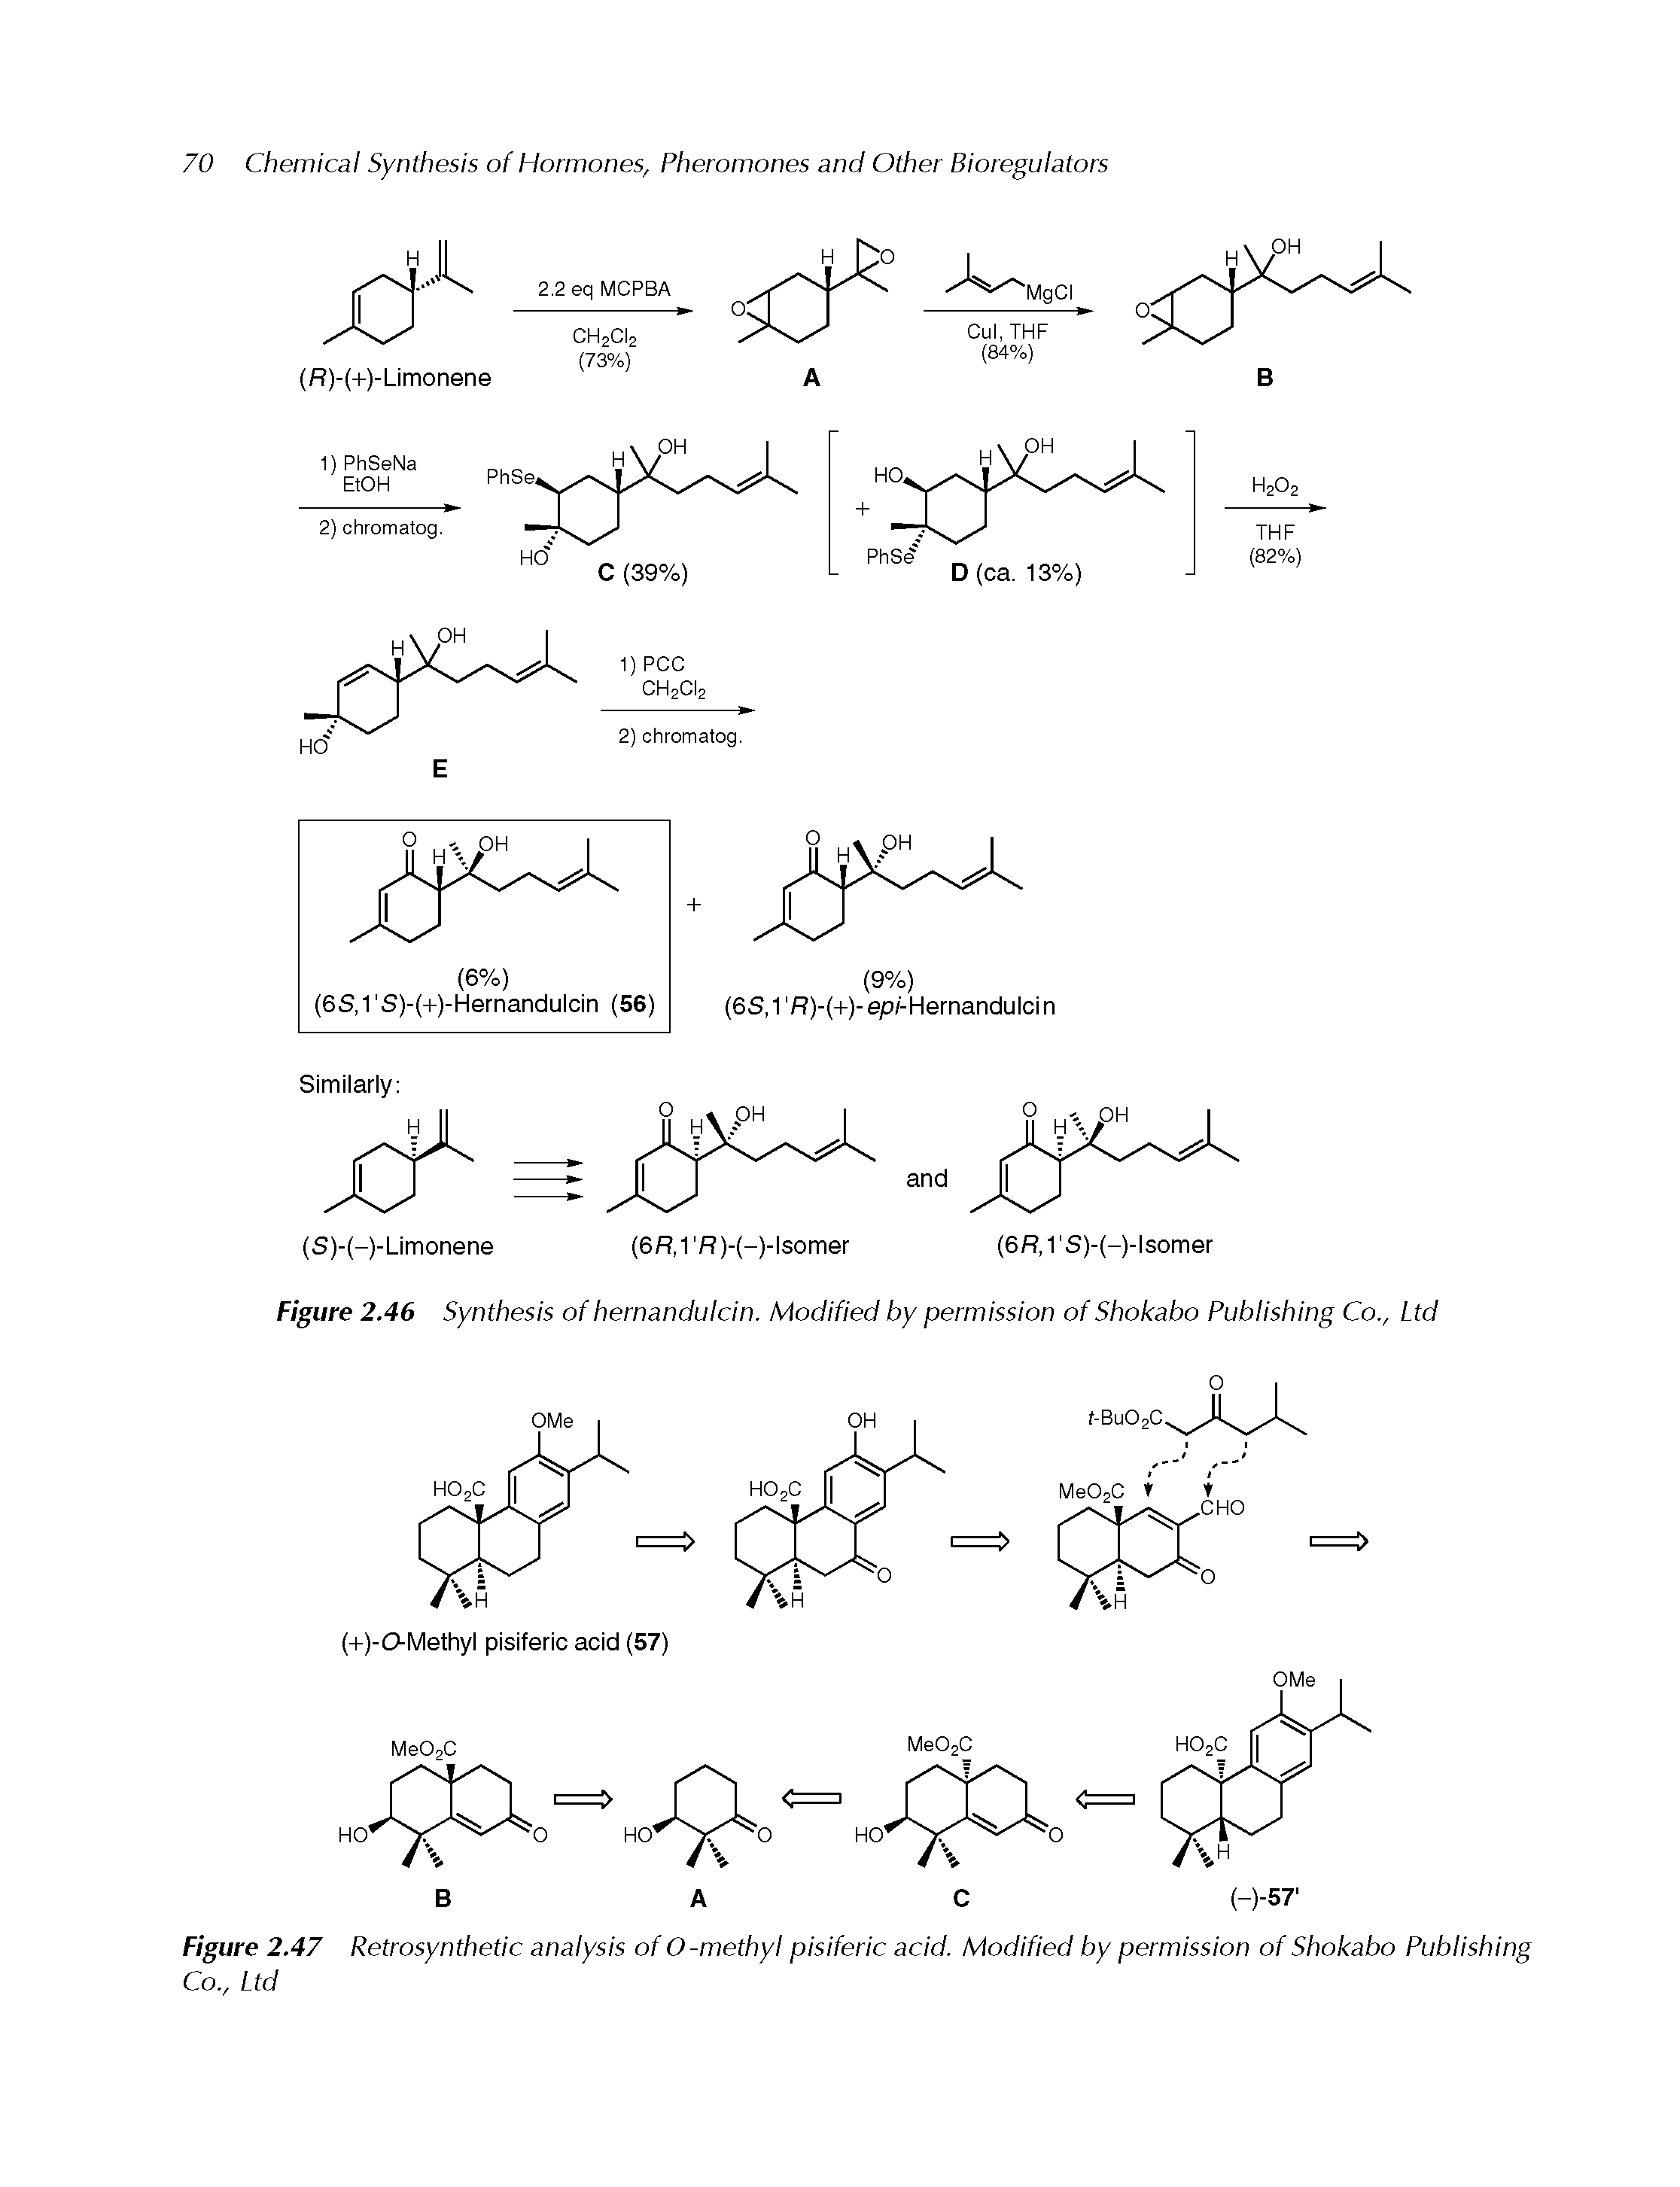 Figure 2.47 Retrosynthetic analysis of O-methyl pisiferic acid. Modified by permission of Shokabo Publishing Co., Ltd...